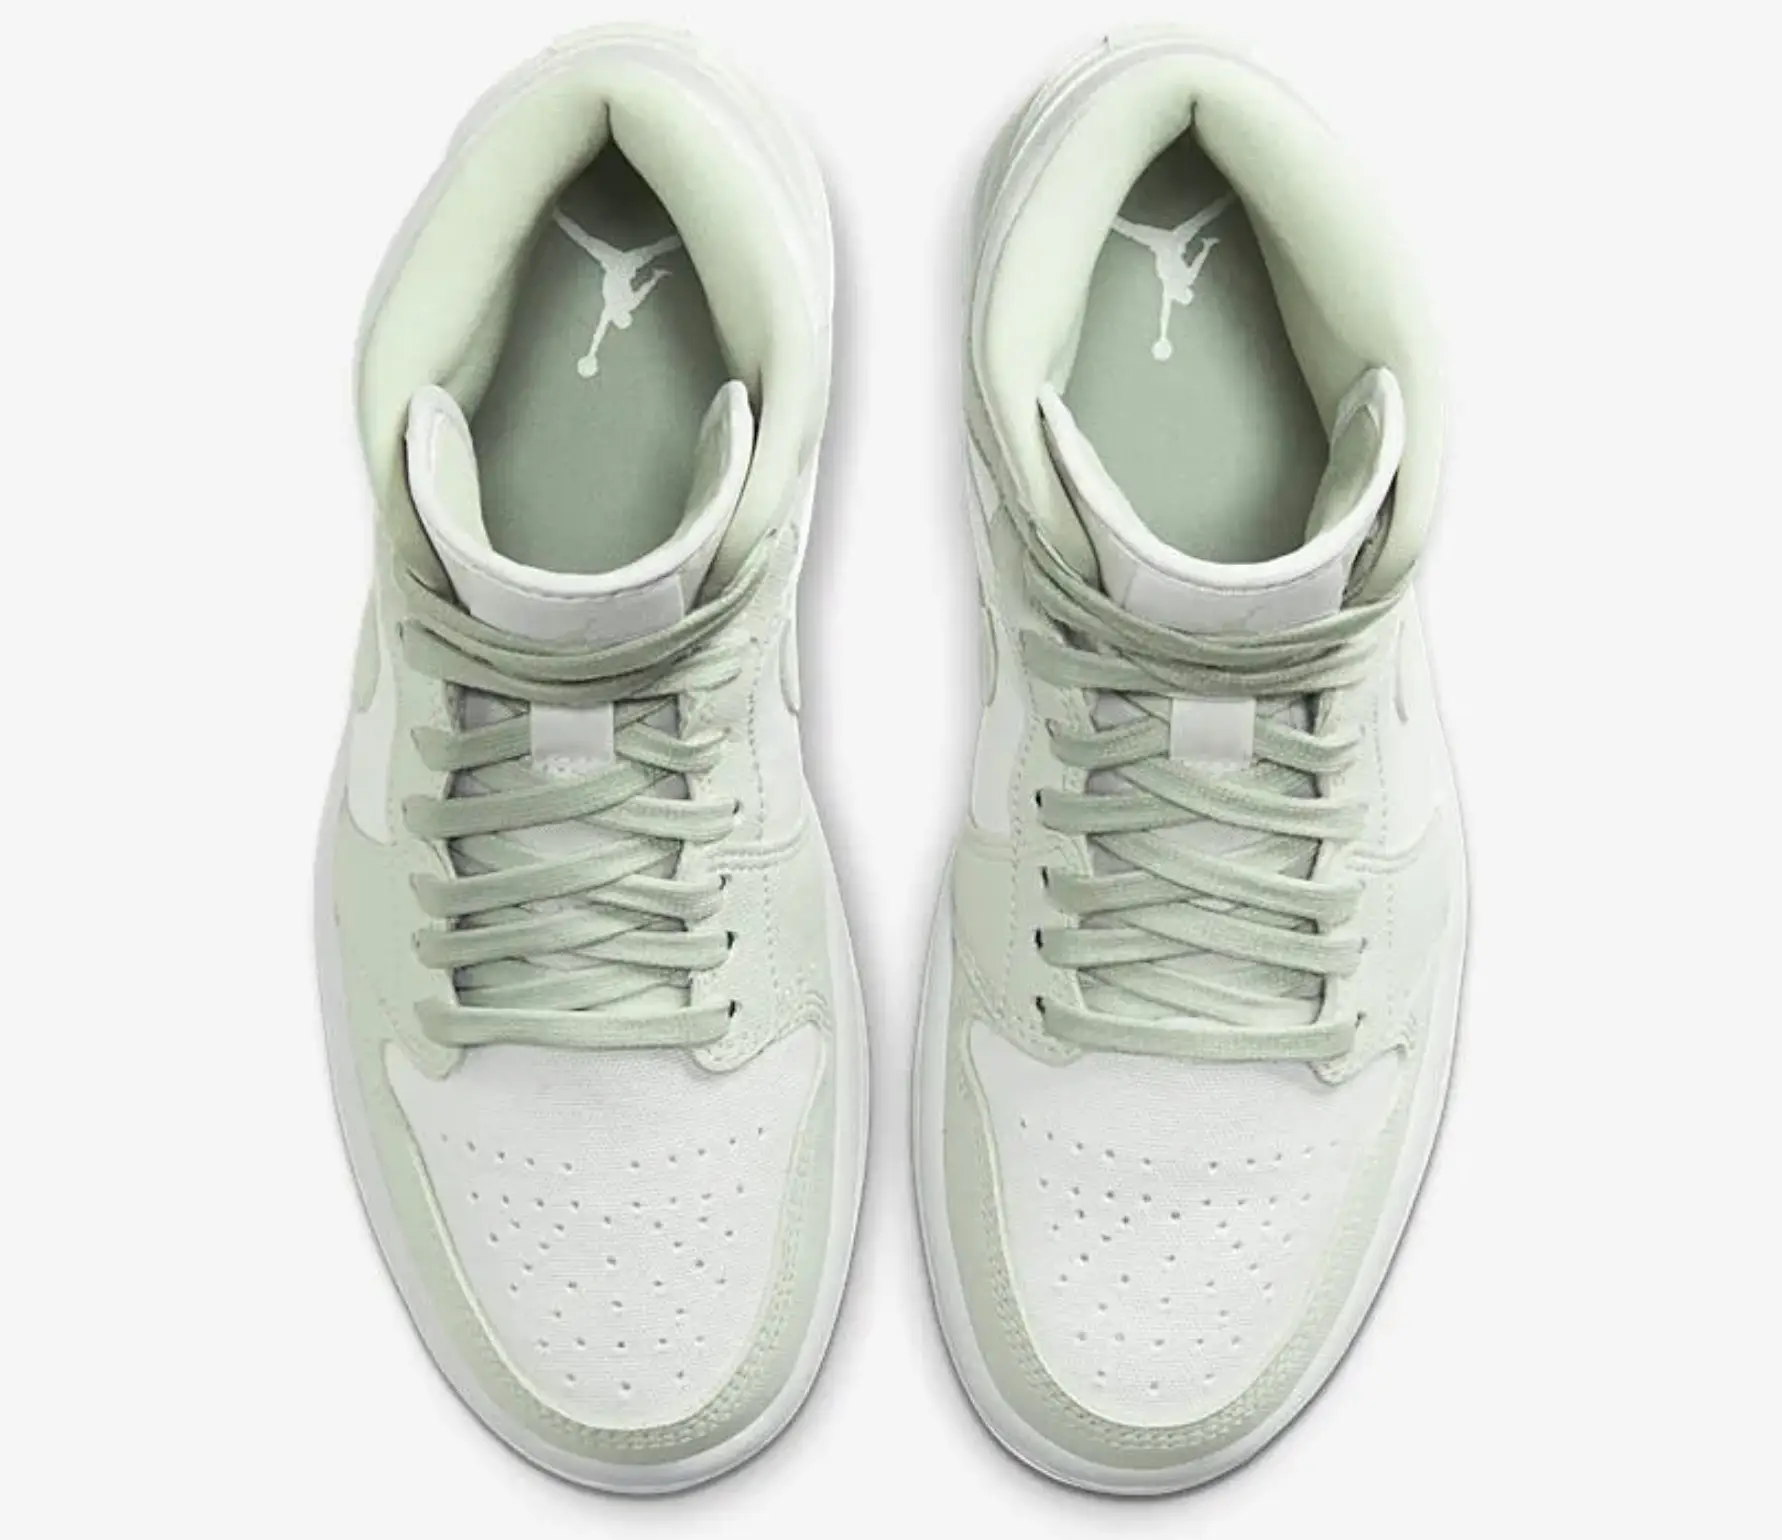 Pistachio Hues Create The Perfect Spring-Ready Nike Air Jordan 1 Mid ...